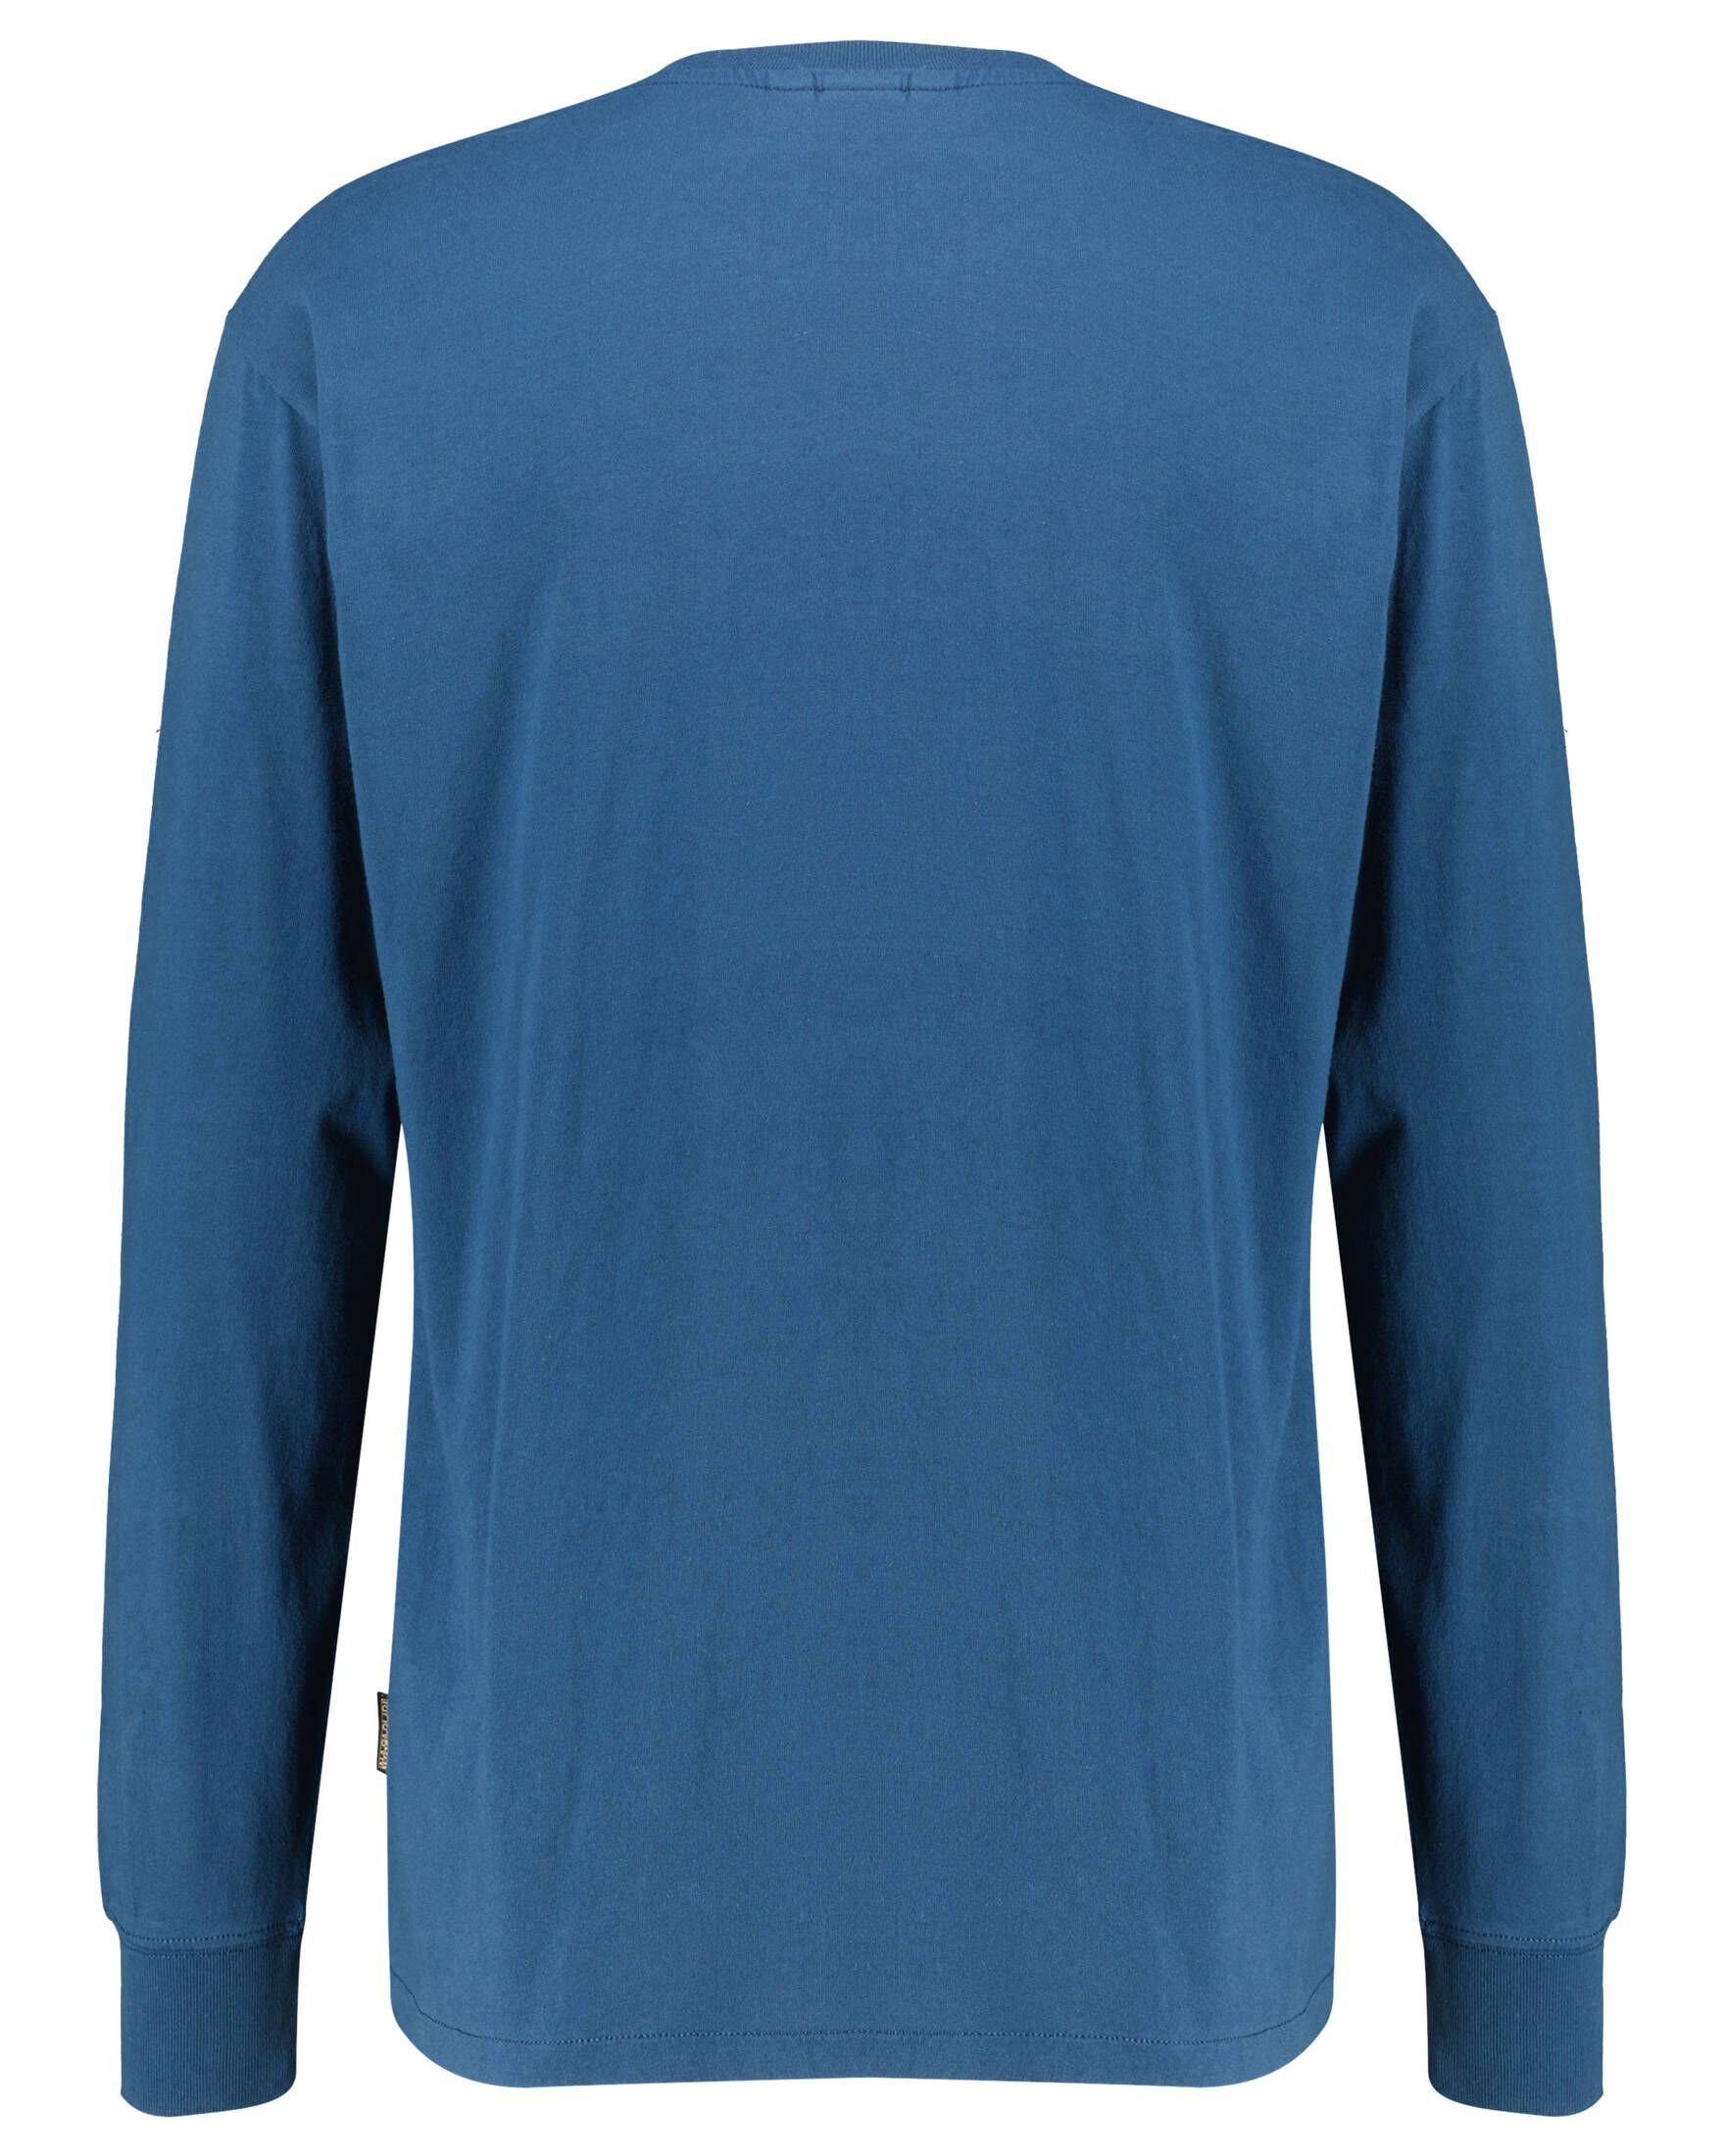 Napapijri T-Shirt Herren Langarmshirt blau (51) (1-tlg)